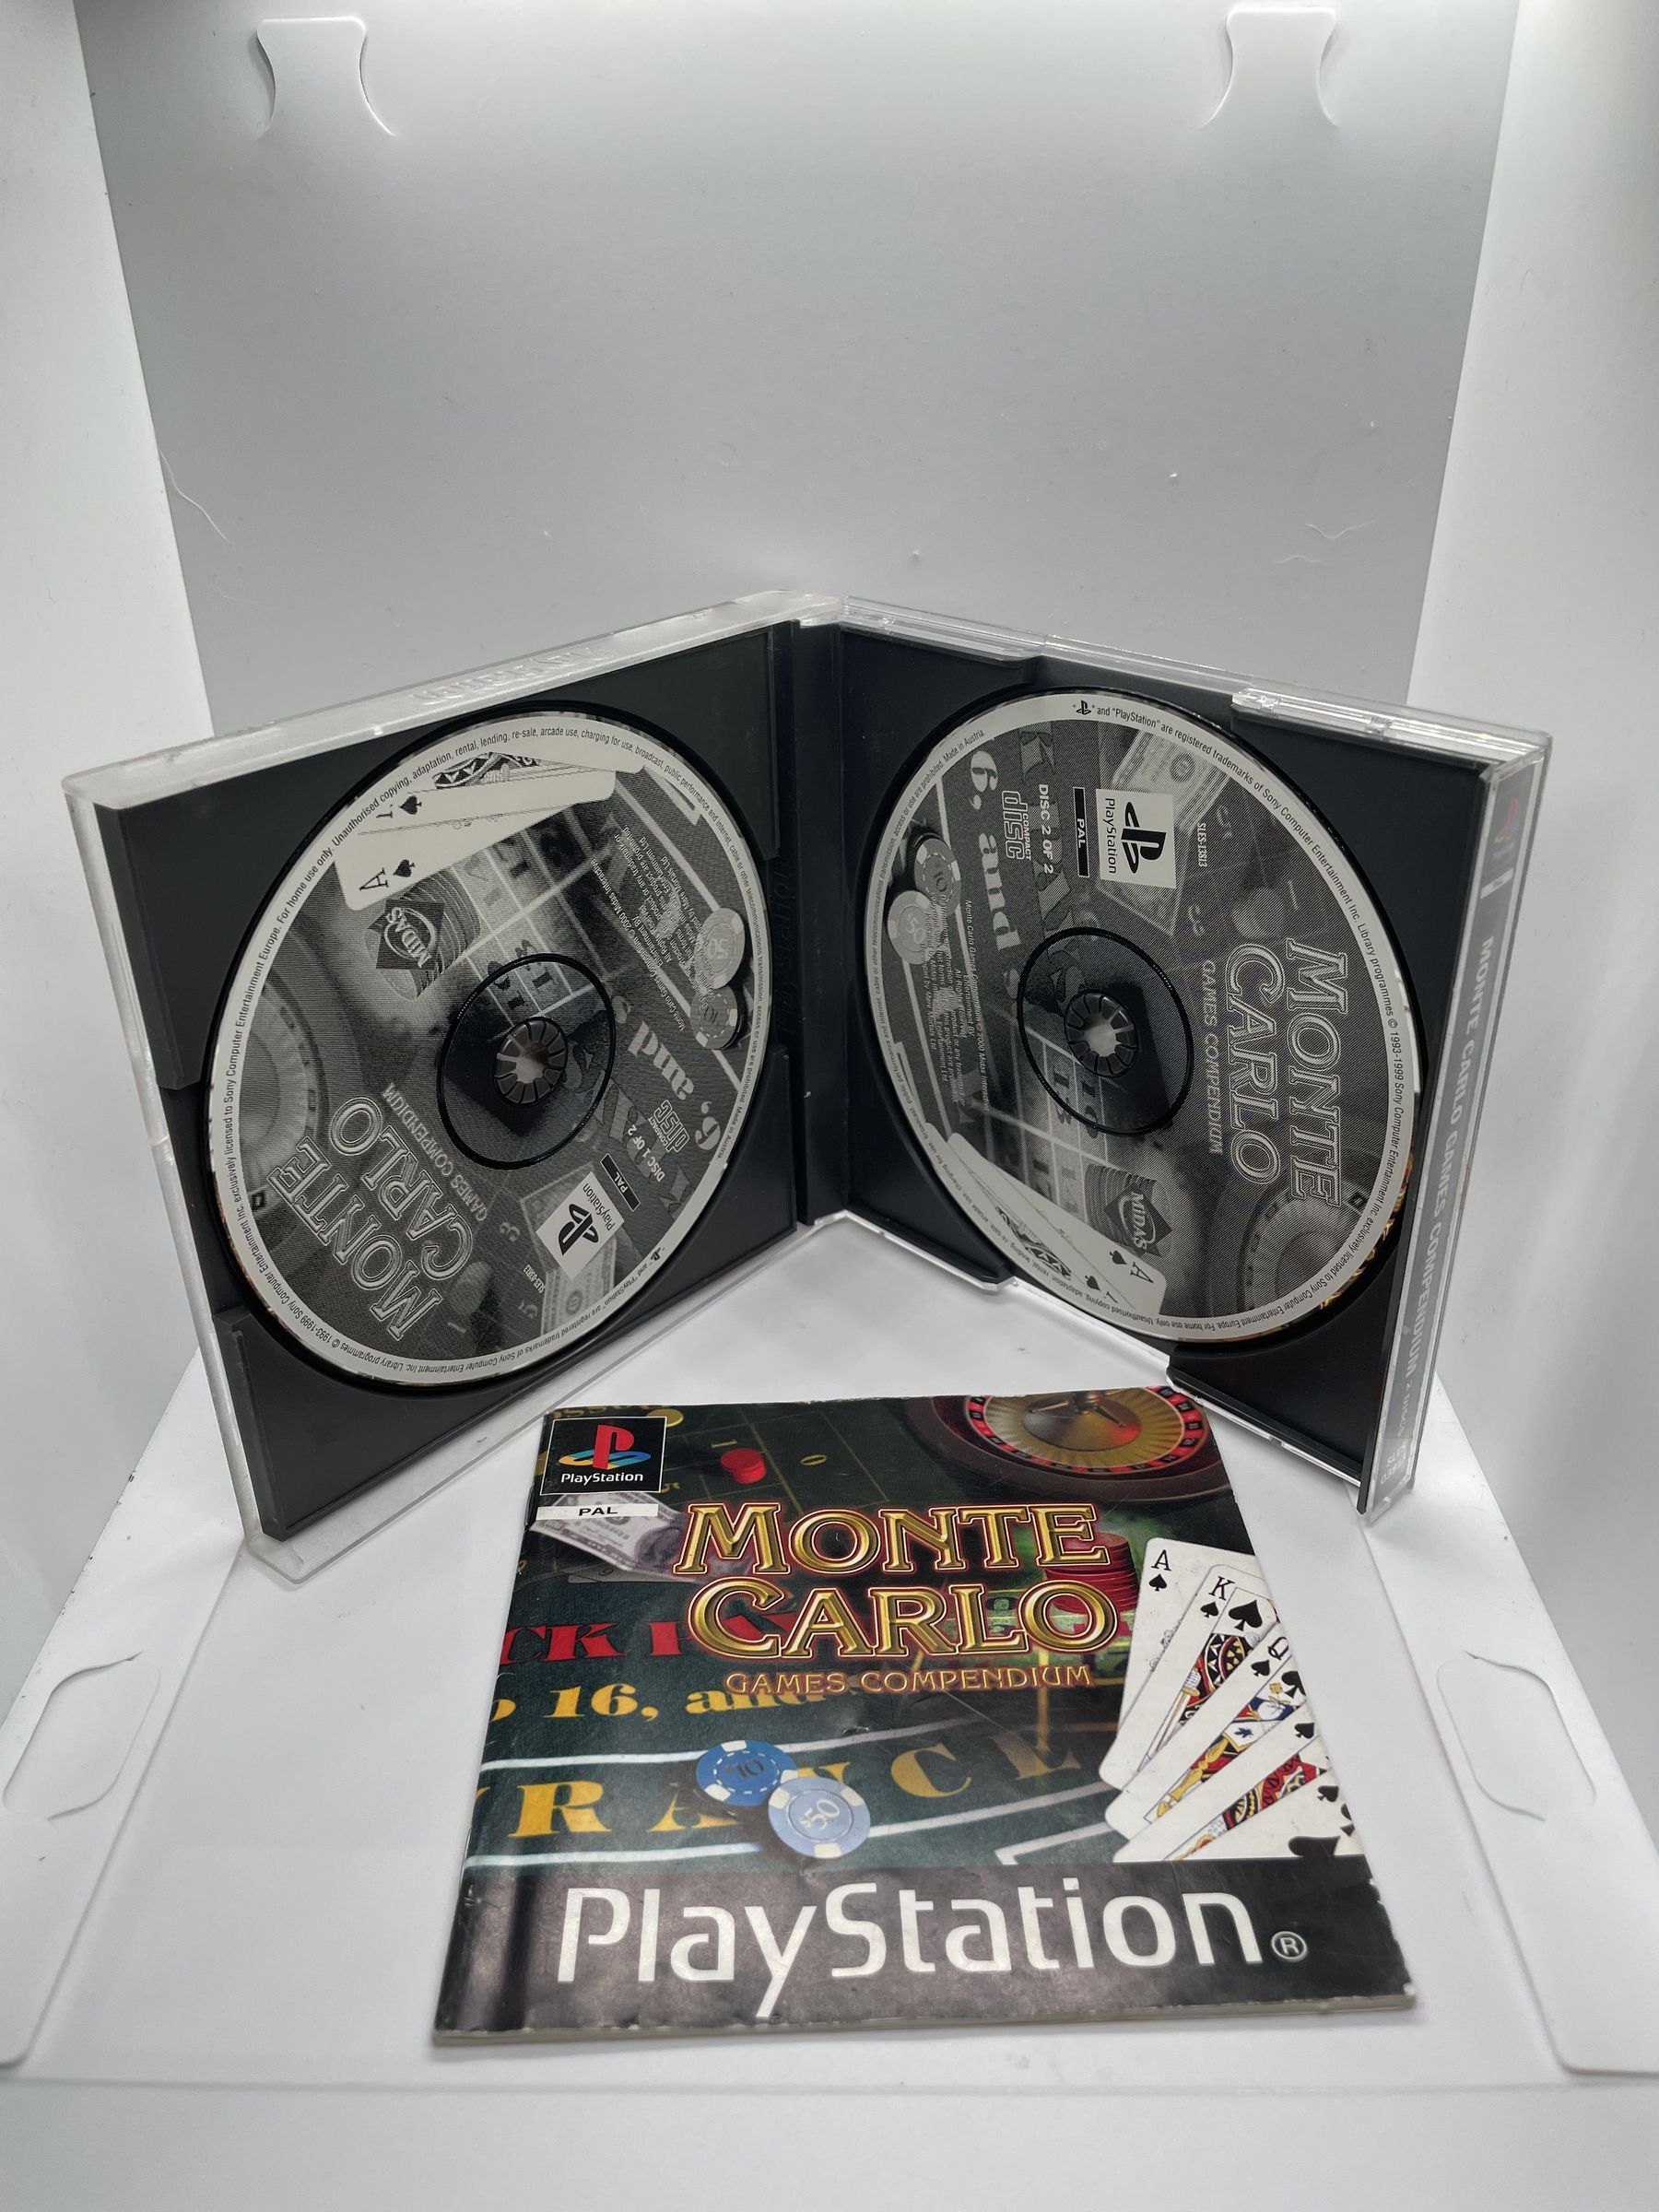 Monte Carlo Games Compendium PS1 PSX